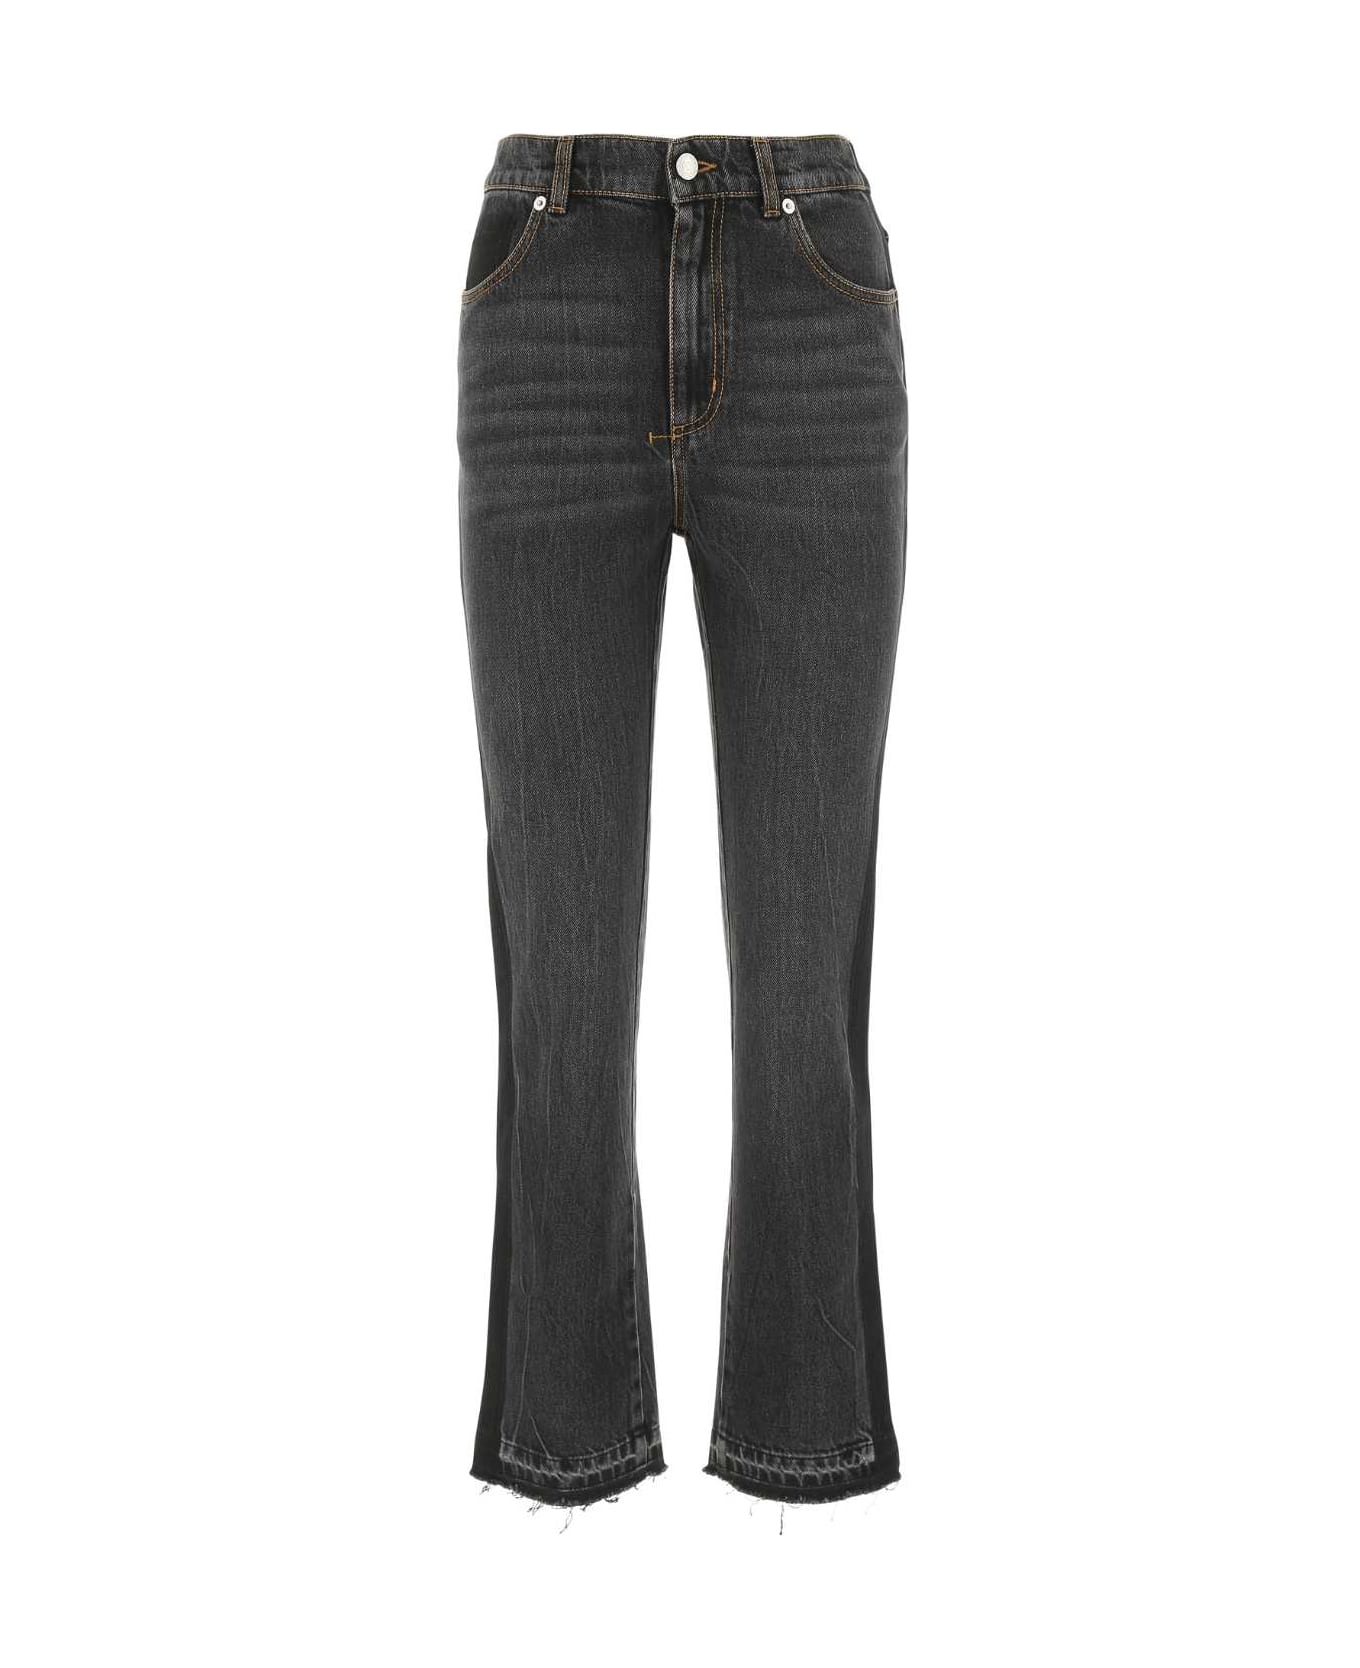 Alexander McQueen Black Denim Jeans - 1131 デニム